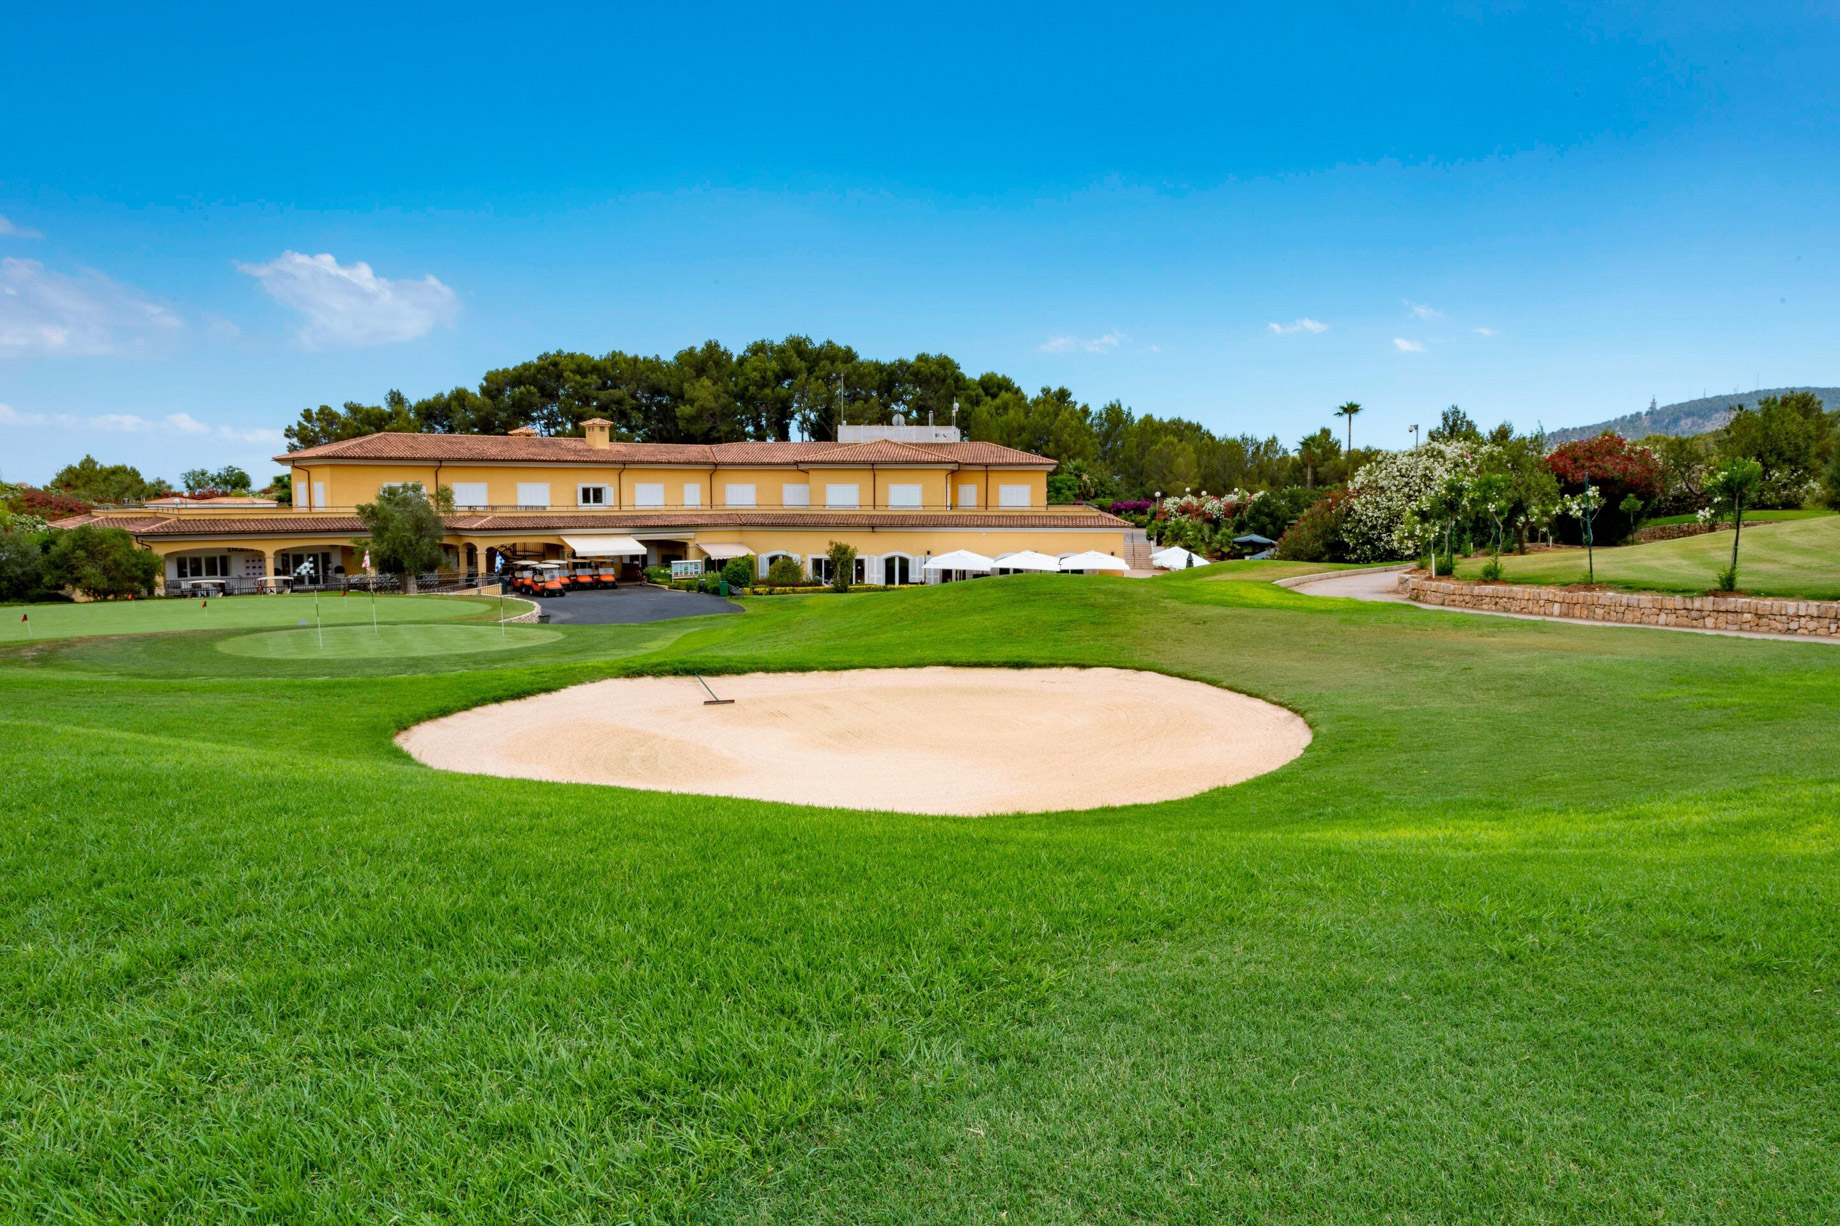 The St. Regis Mardavall Mallorca Resort – Palma de Mallorca, Spain – Golf Course Son Quint